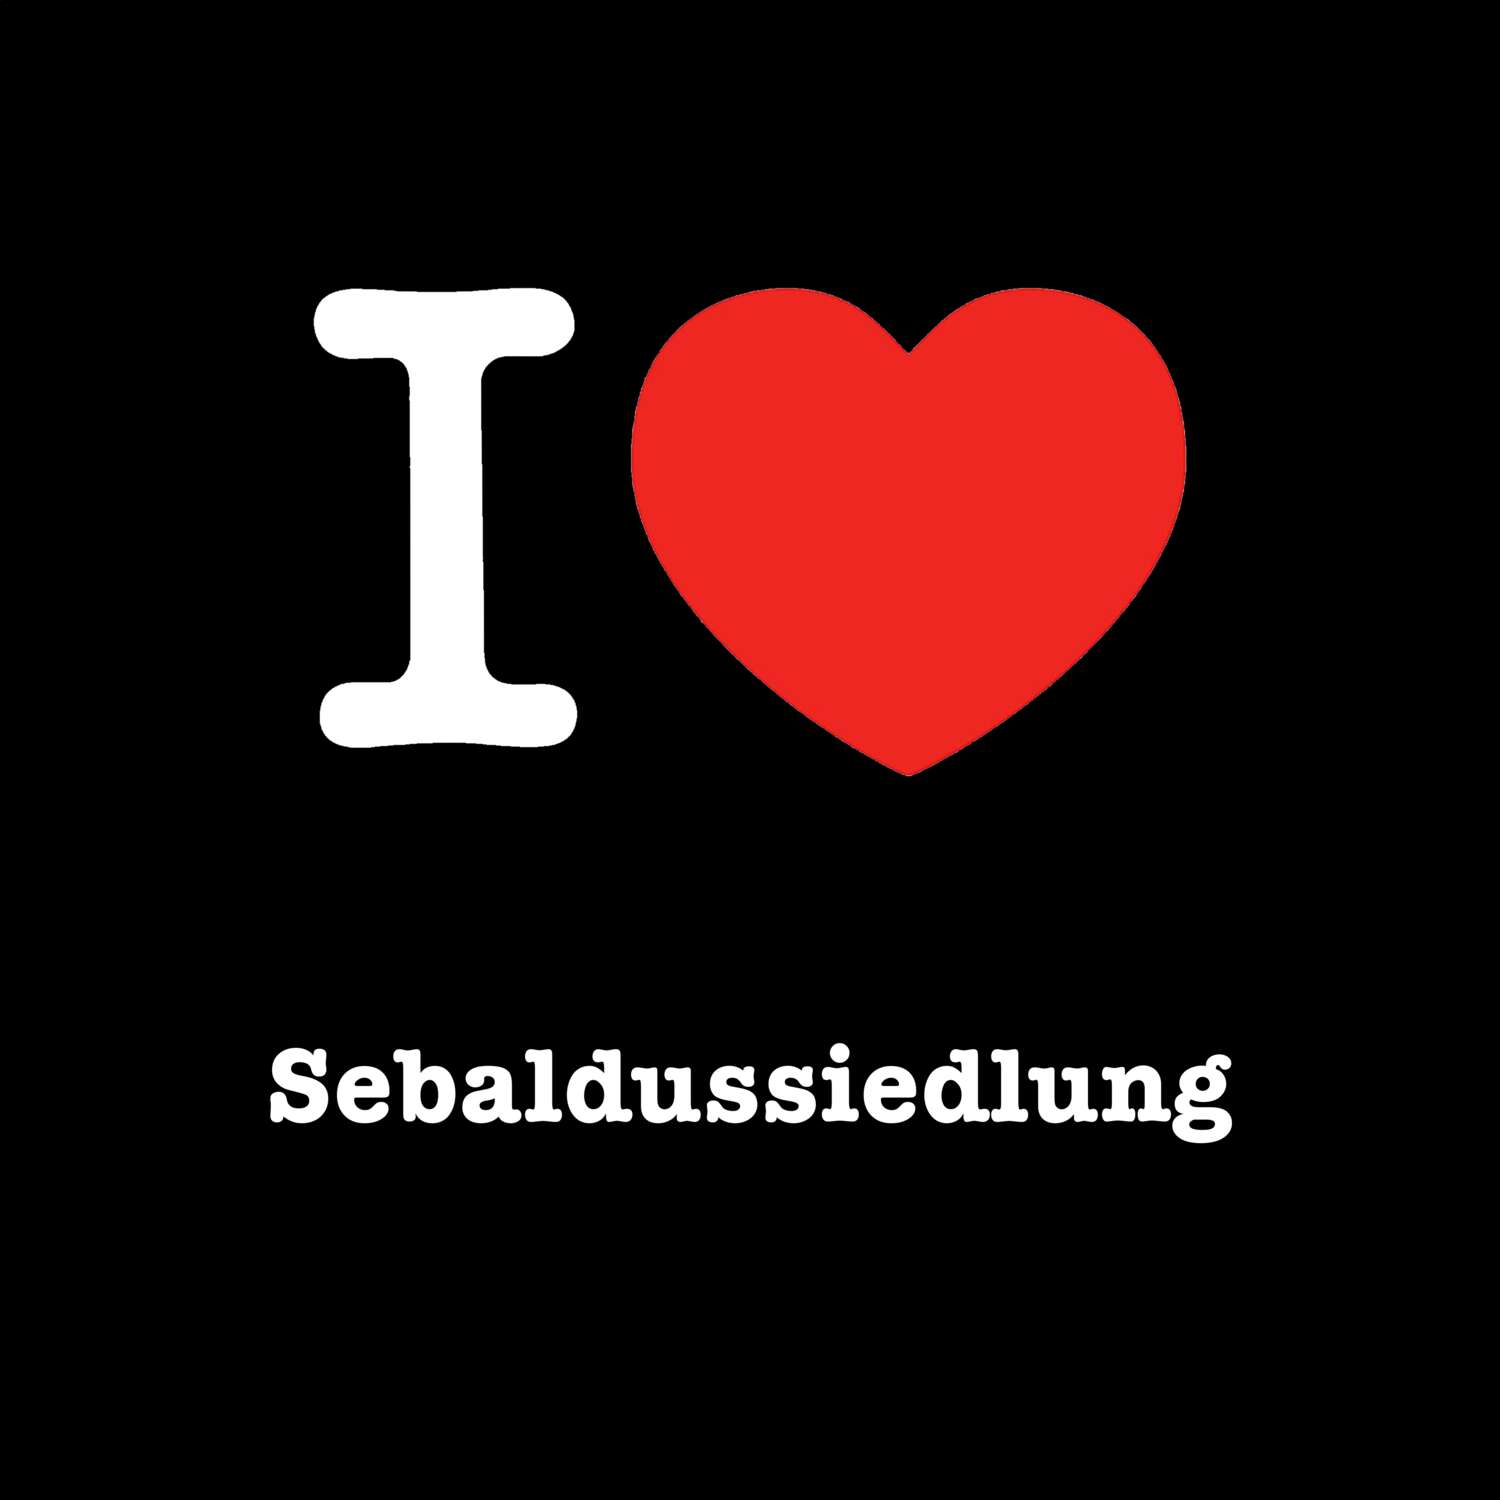 Sebaldussiedlung T-Shirt »I love«